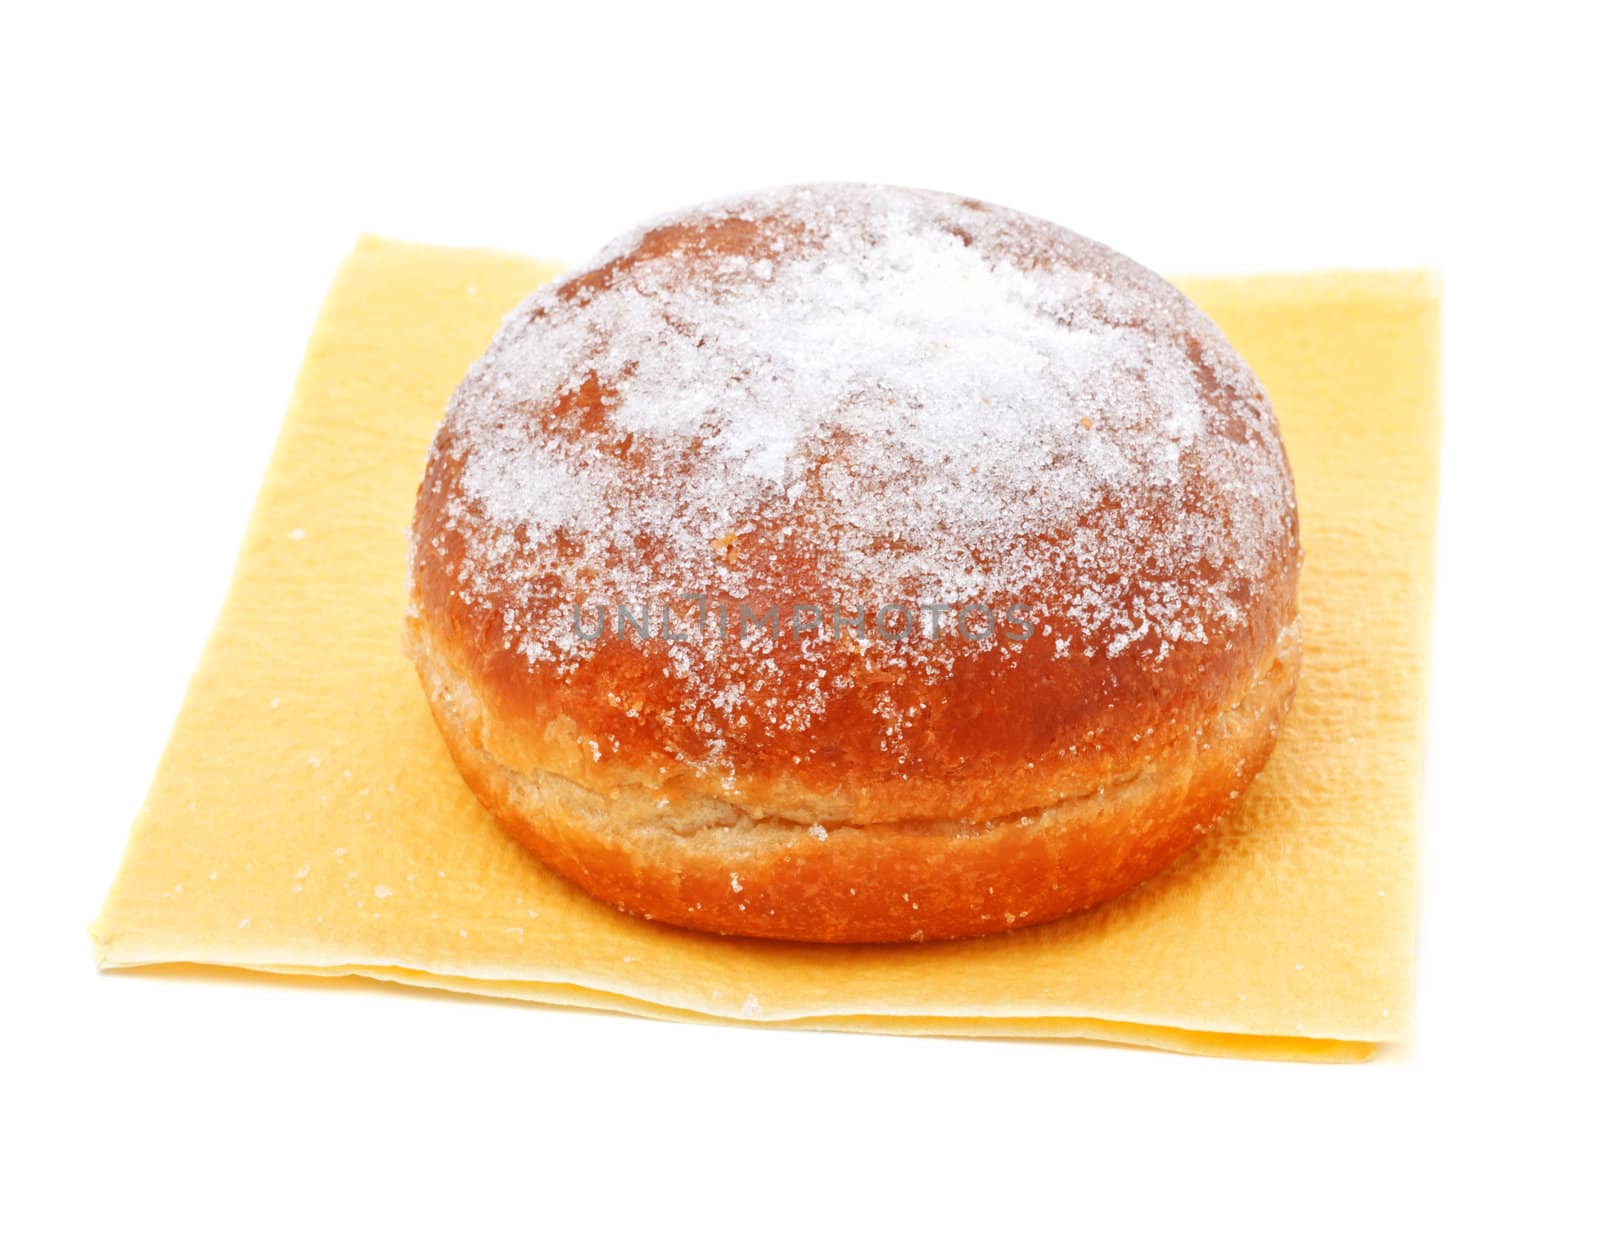 donut in powdered sugar on paper napkin